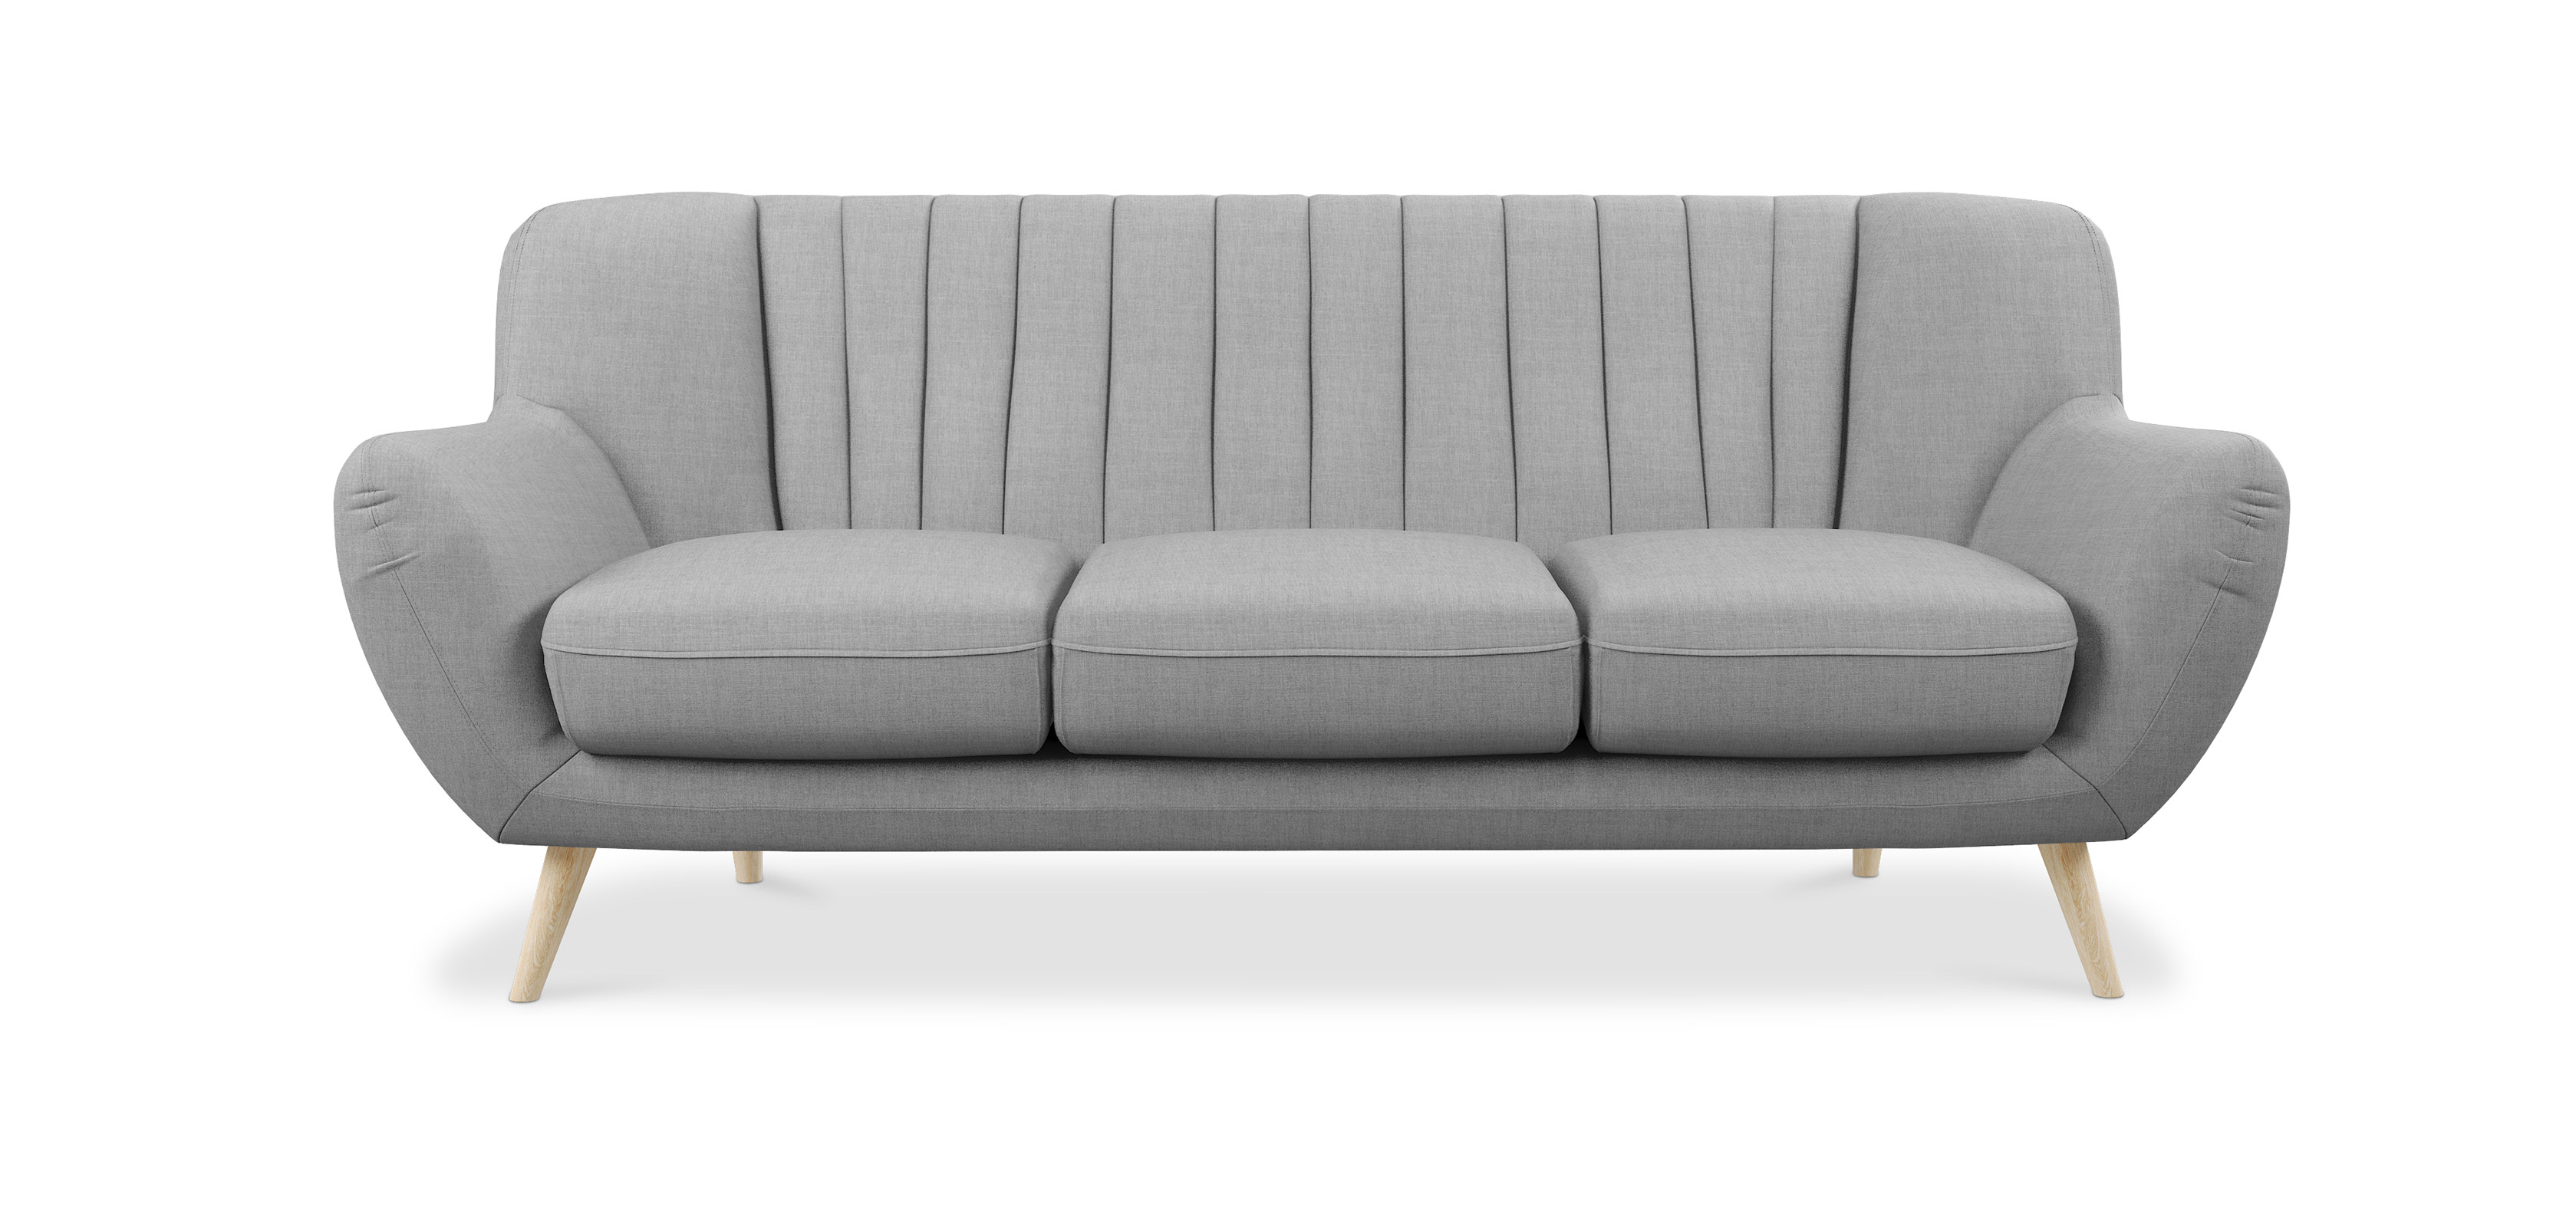 scandinavian style sofa bed uk